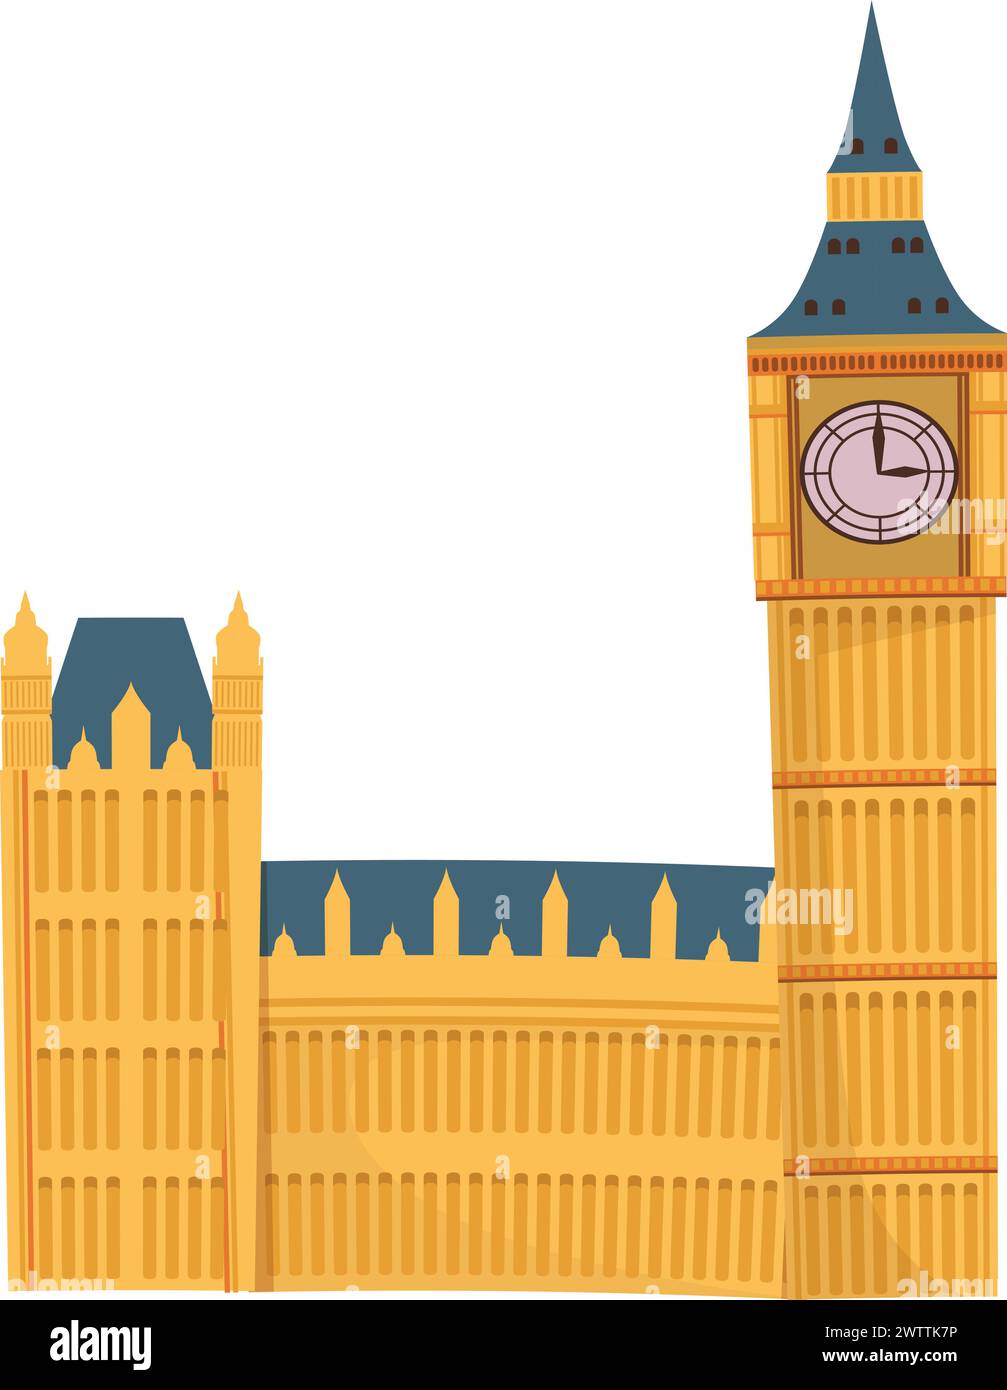 Big ben tower. British landmark cartoon icon Stock Vector